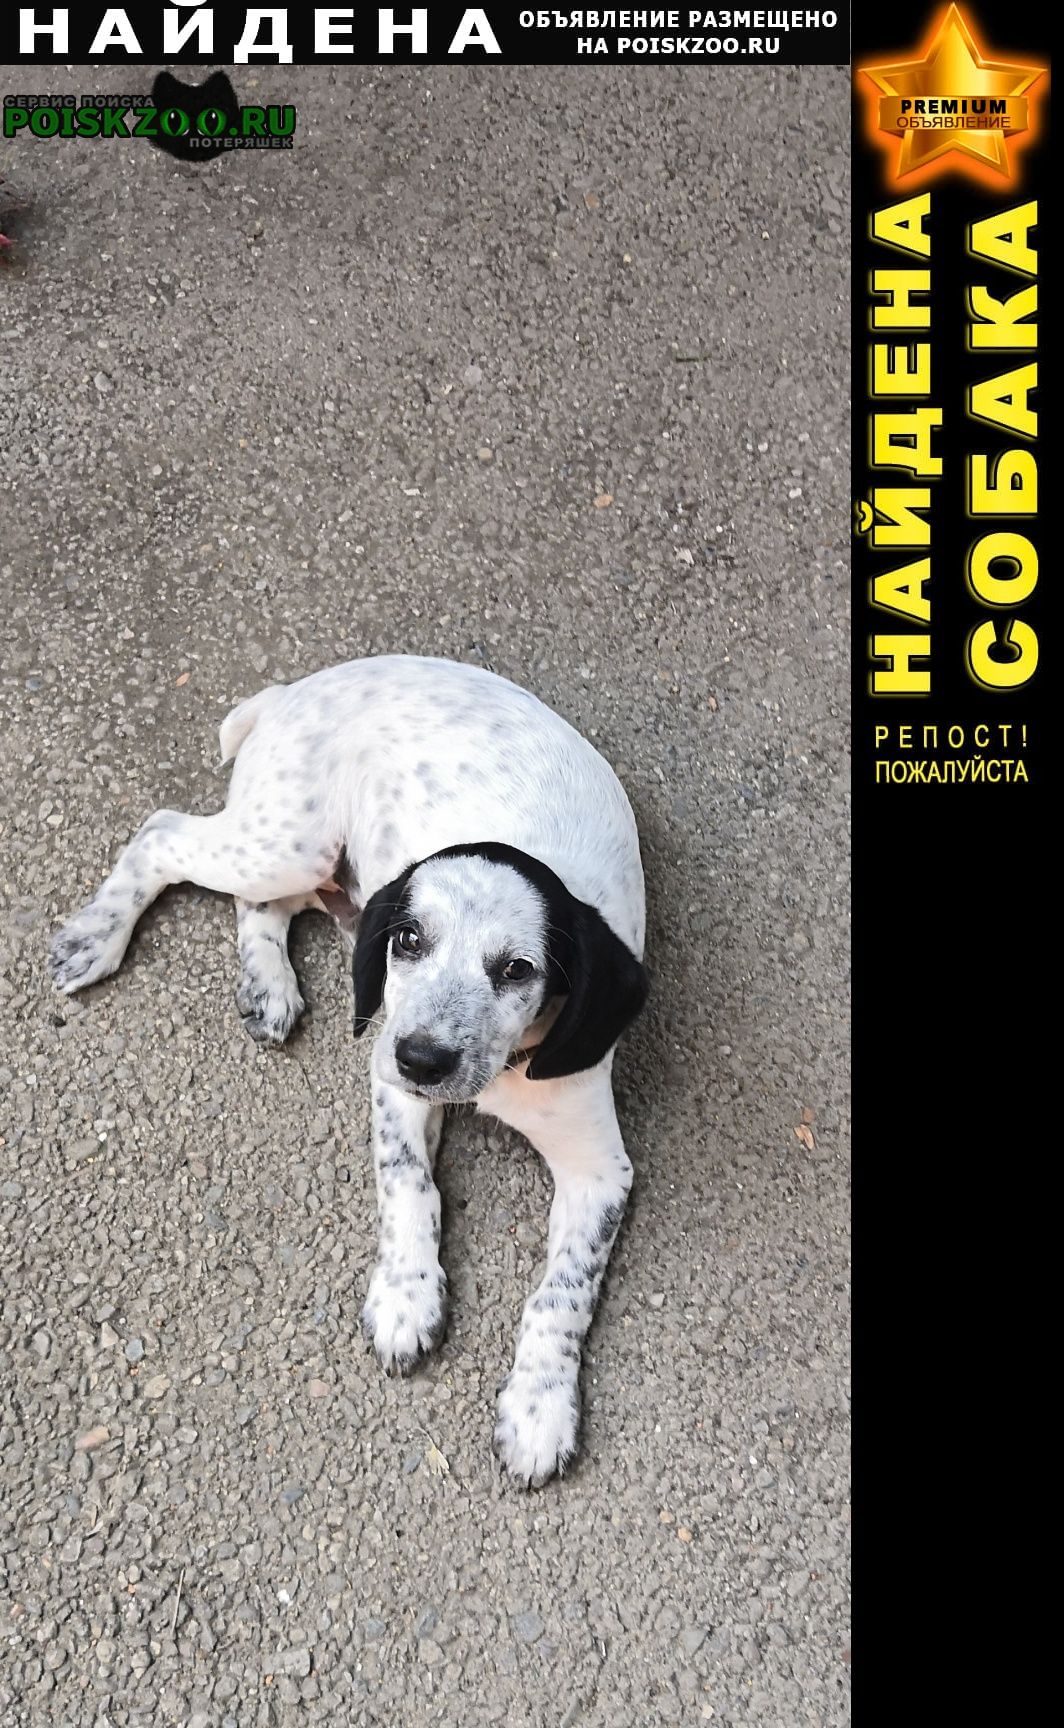 Найдена собака кобель шенок 3 месяца. Краснодар